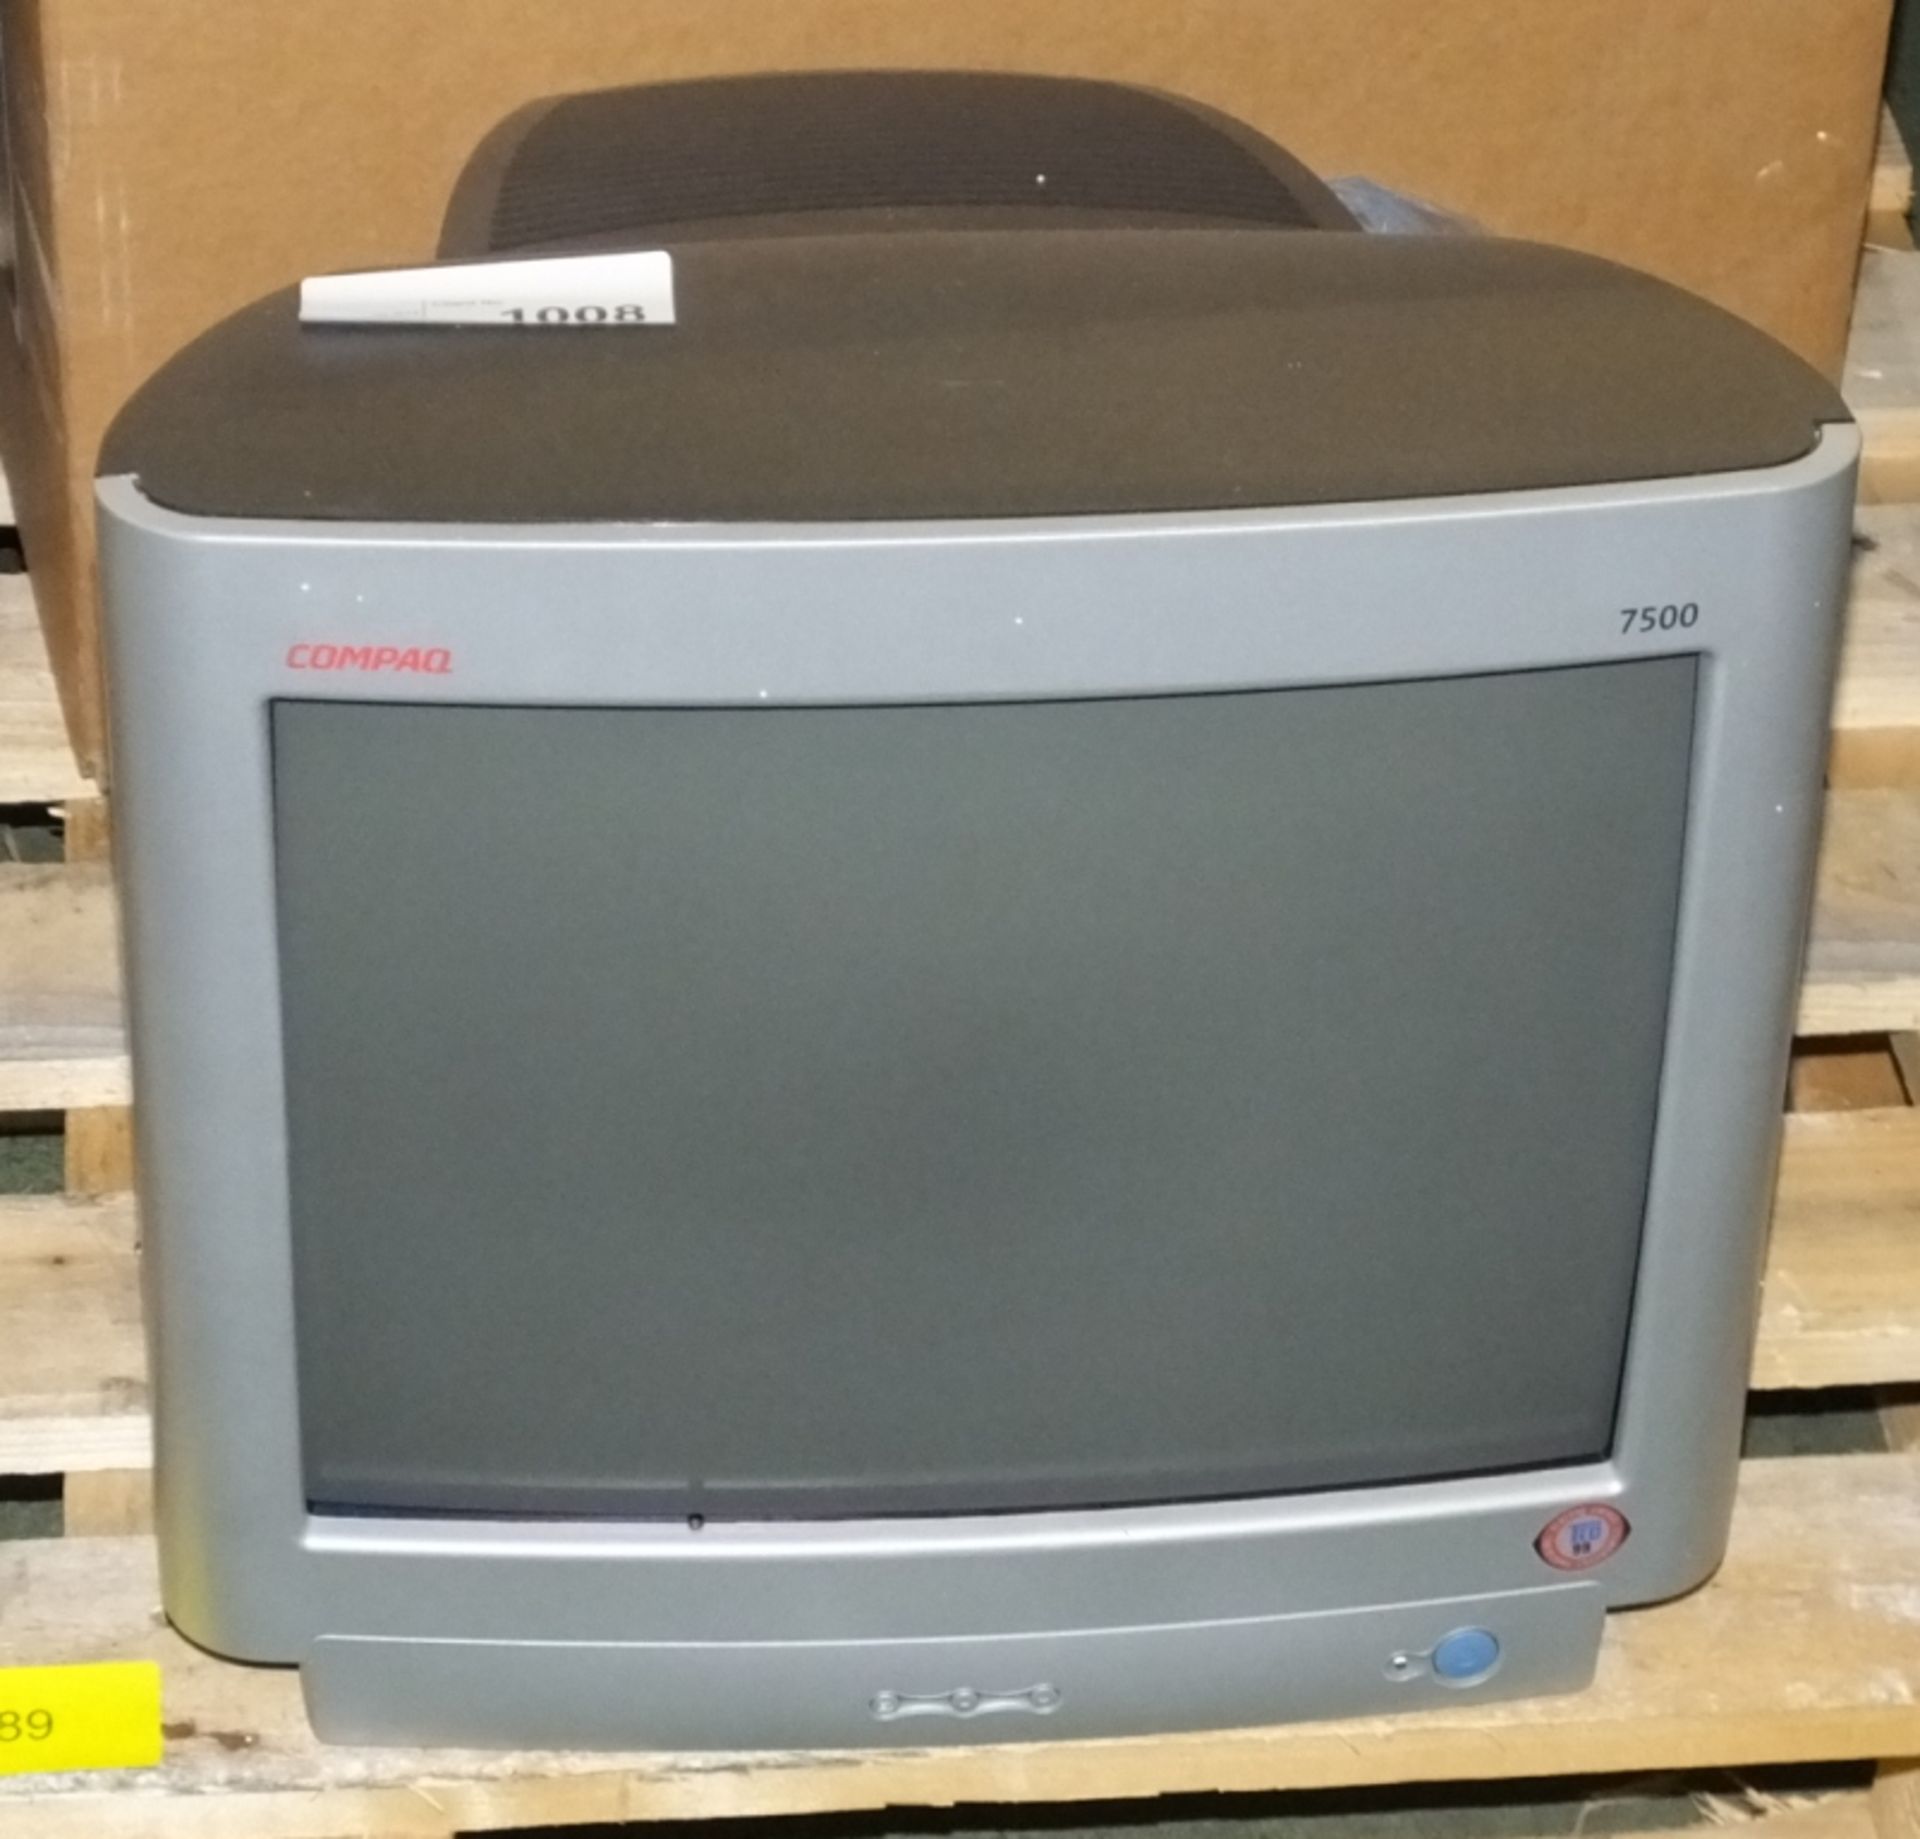 2x Compaq CRT Monitors - V50 & 7500 - Image 2 of 3